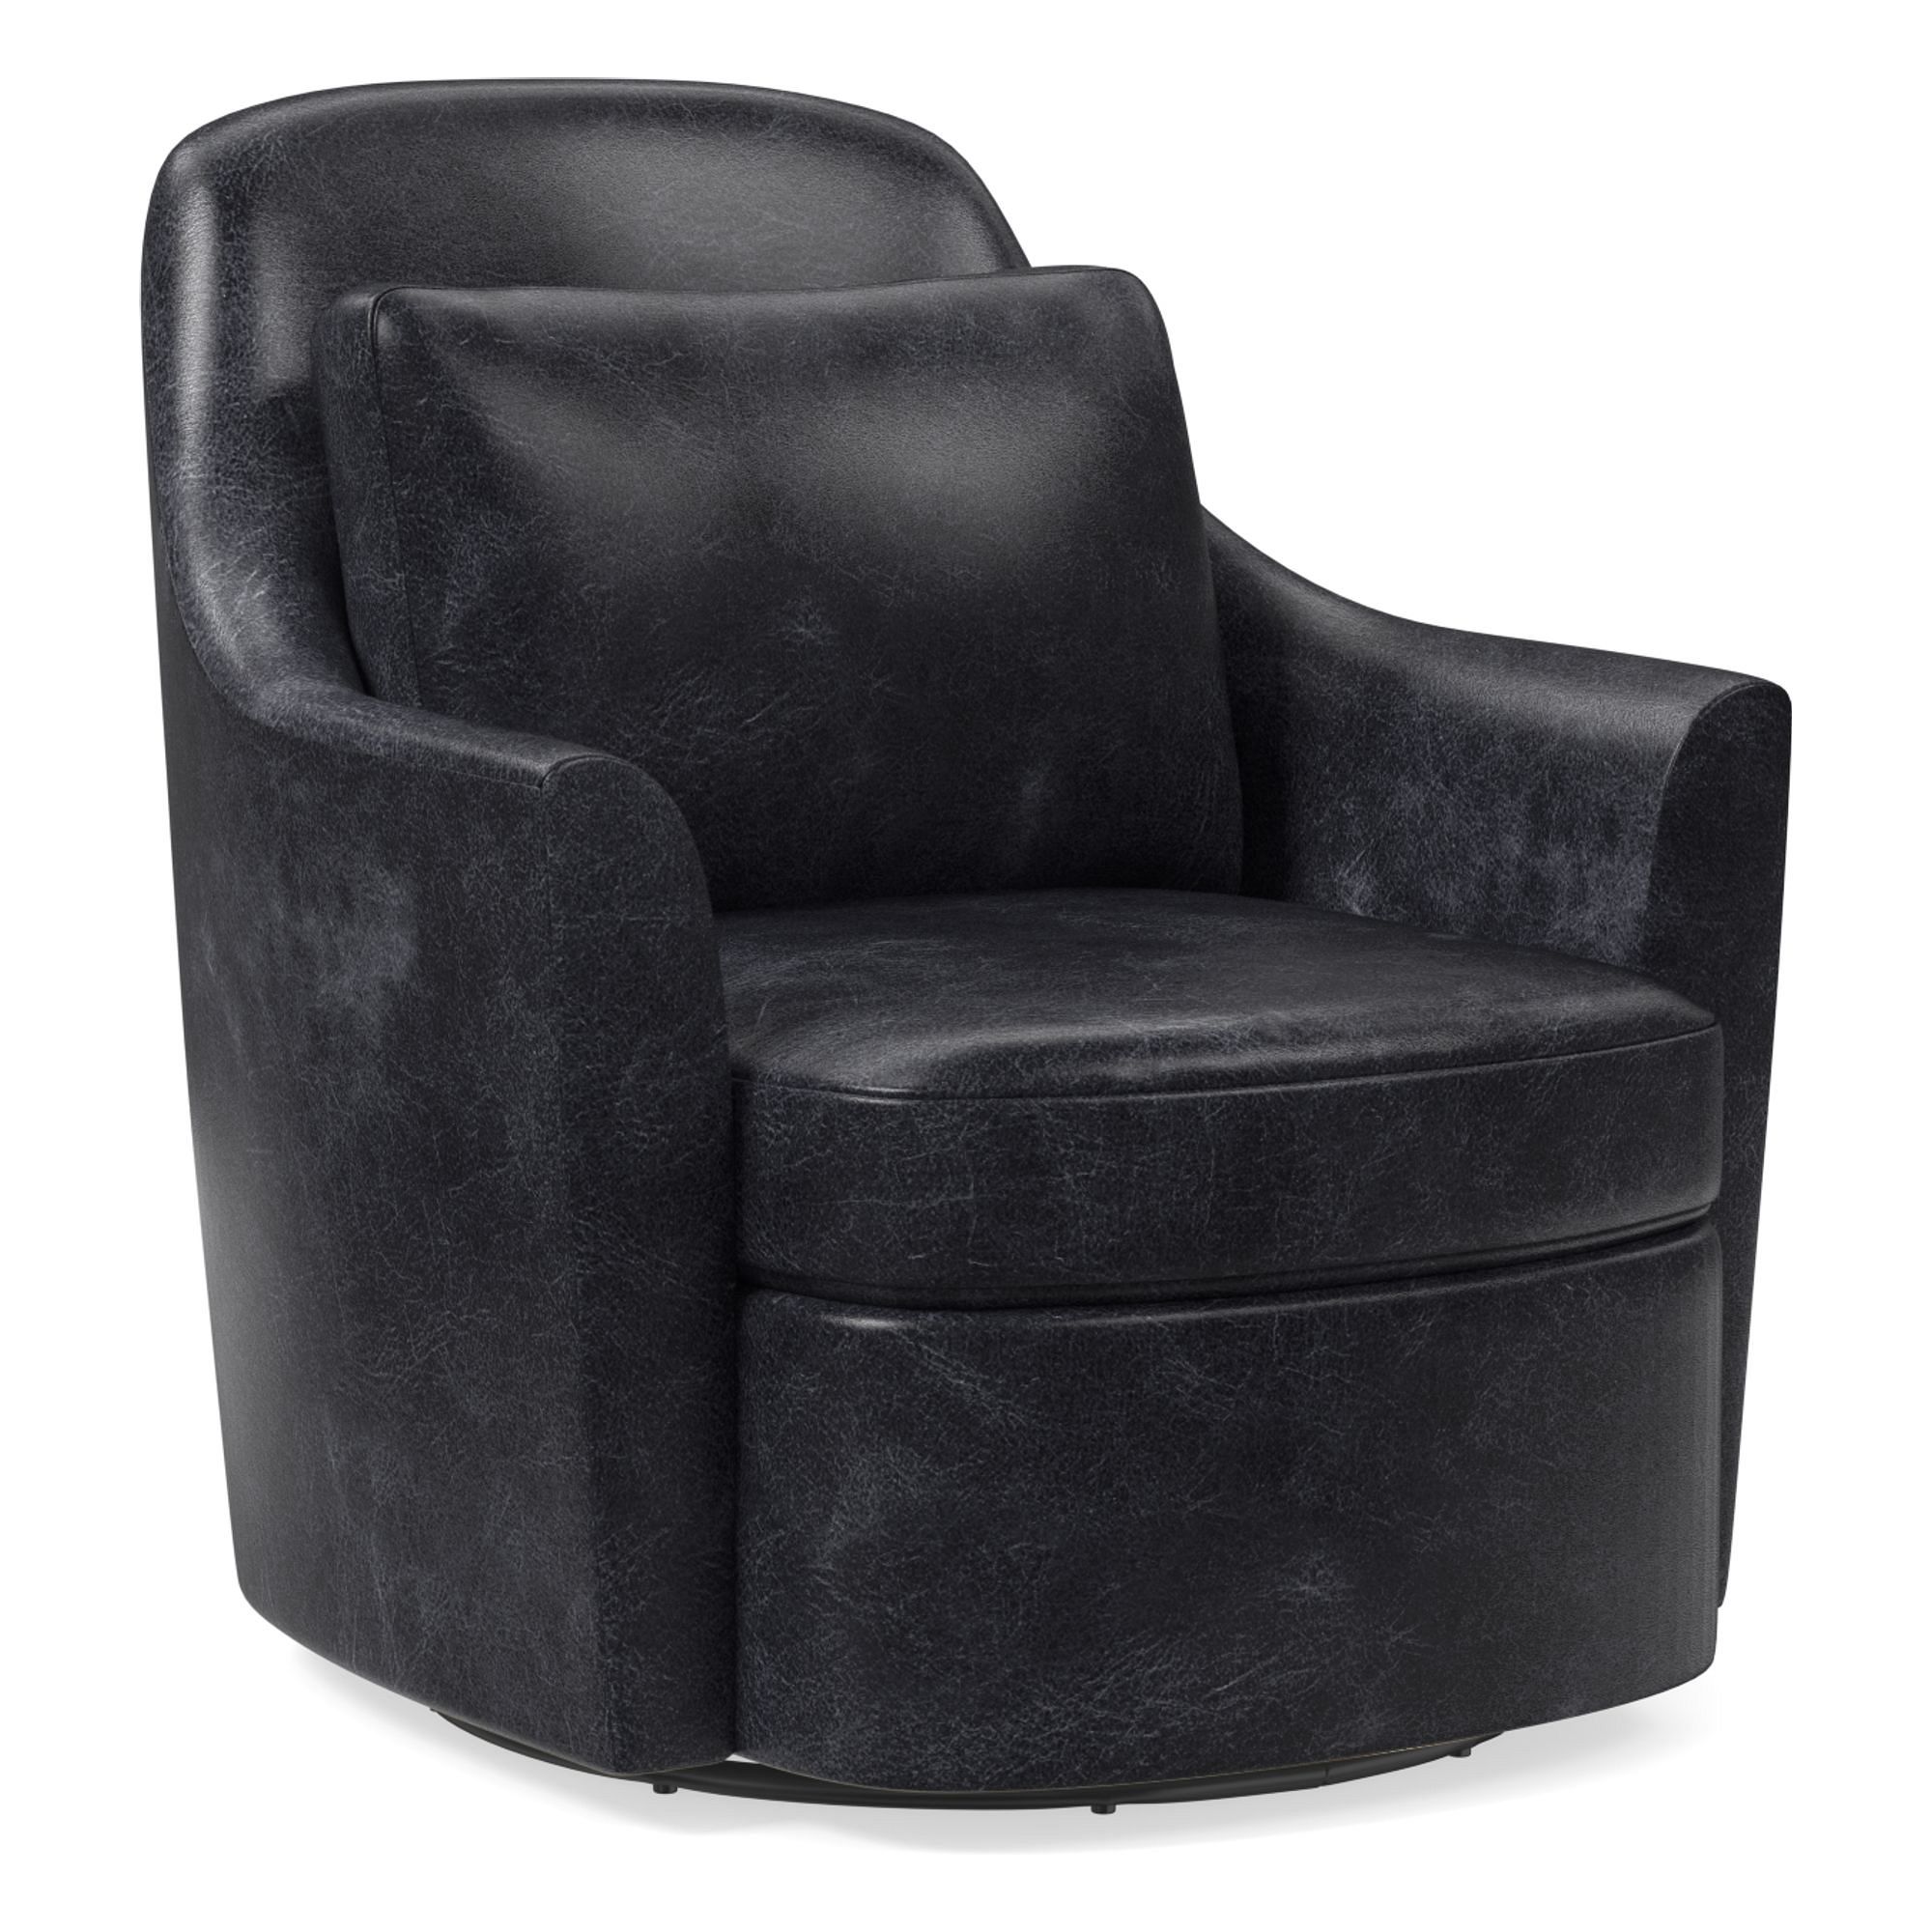 Dallas Leather Swivel Chair | West Elm